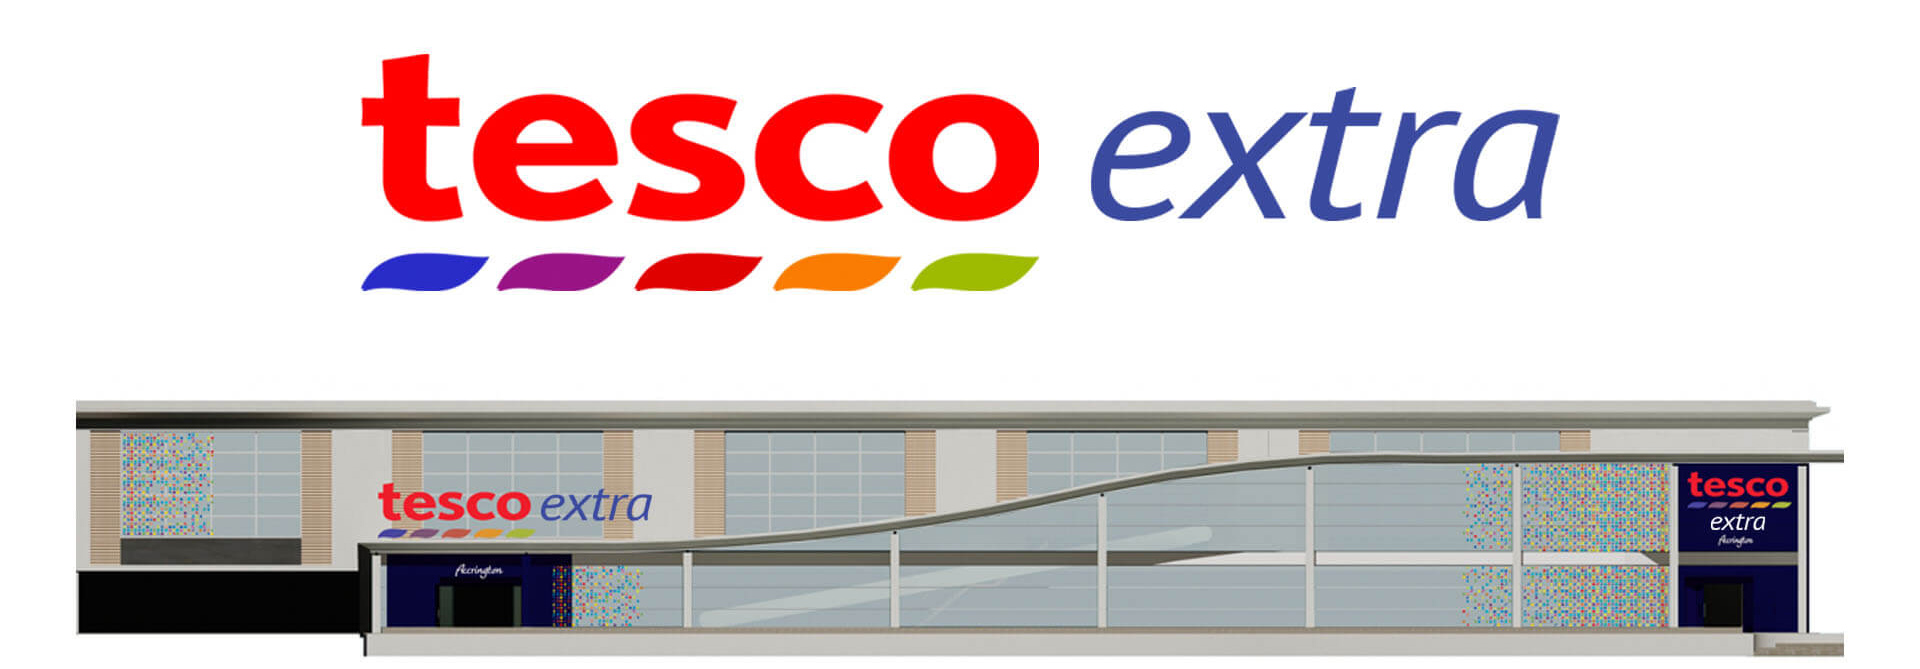 Rebranding Tesco extra brand identity on hypermarkets